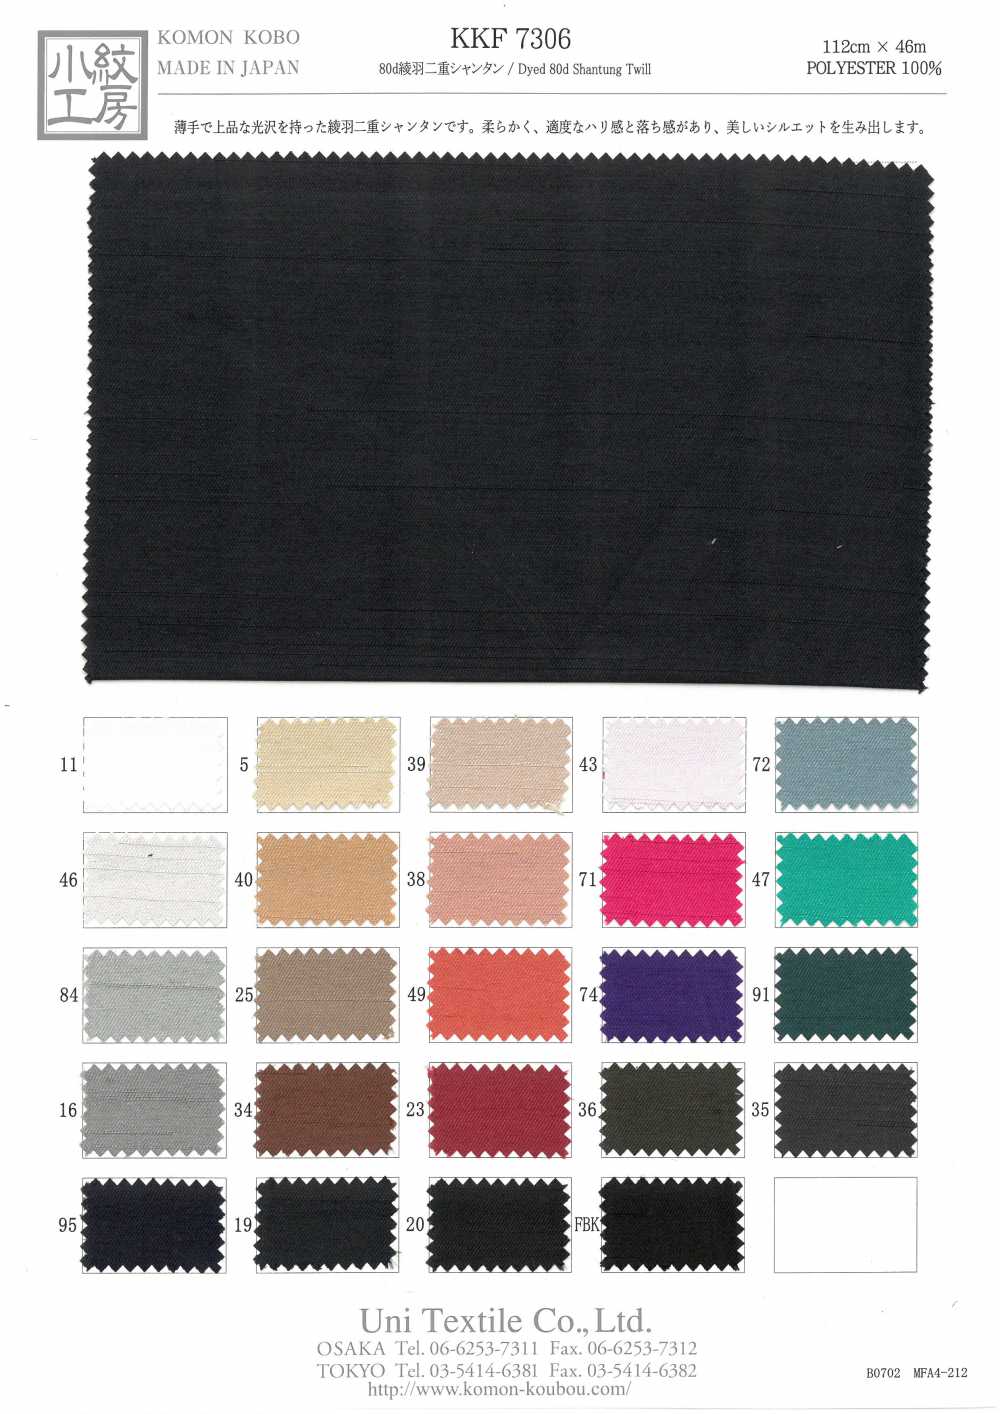 KKF7306 80d Twill Habutae Habutai Shantung[Textile / Fabric] Uni Textile